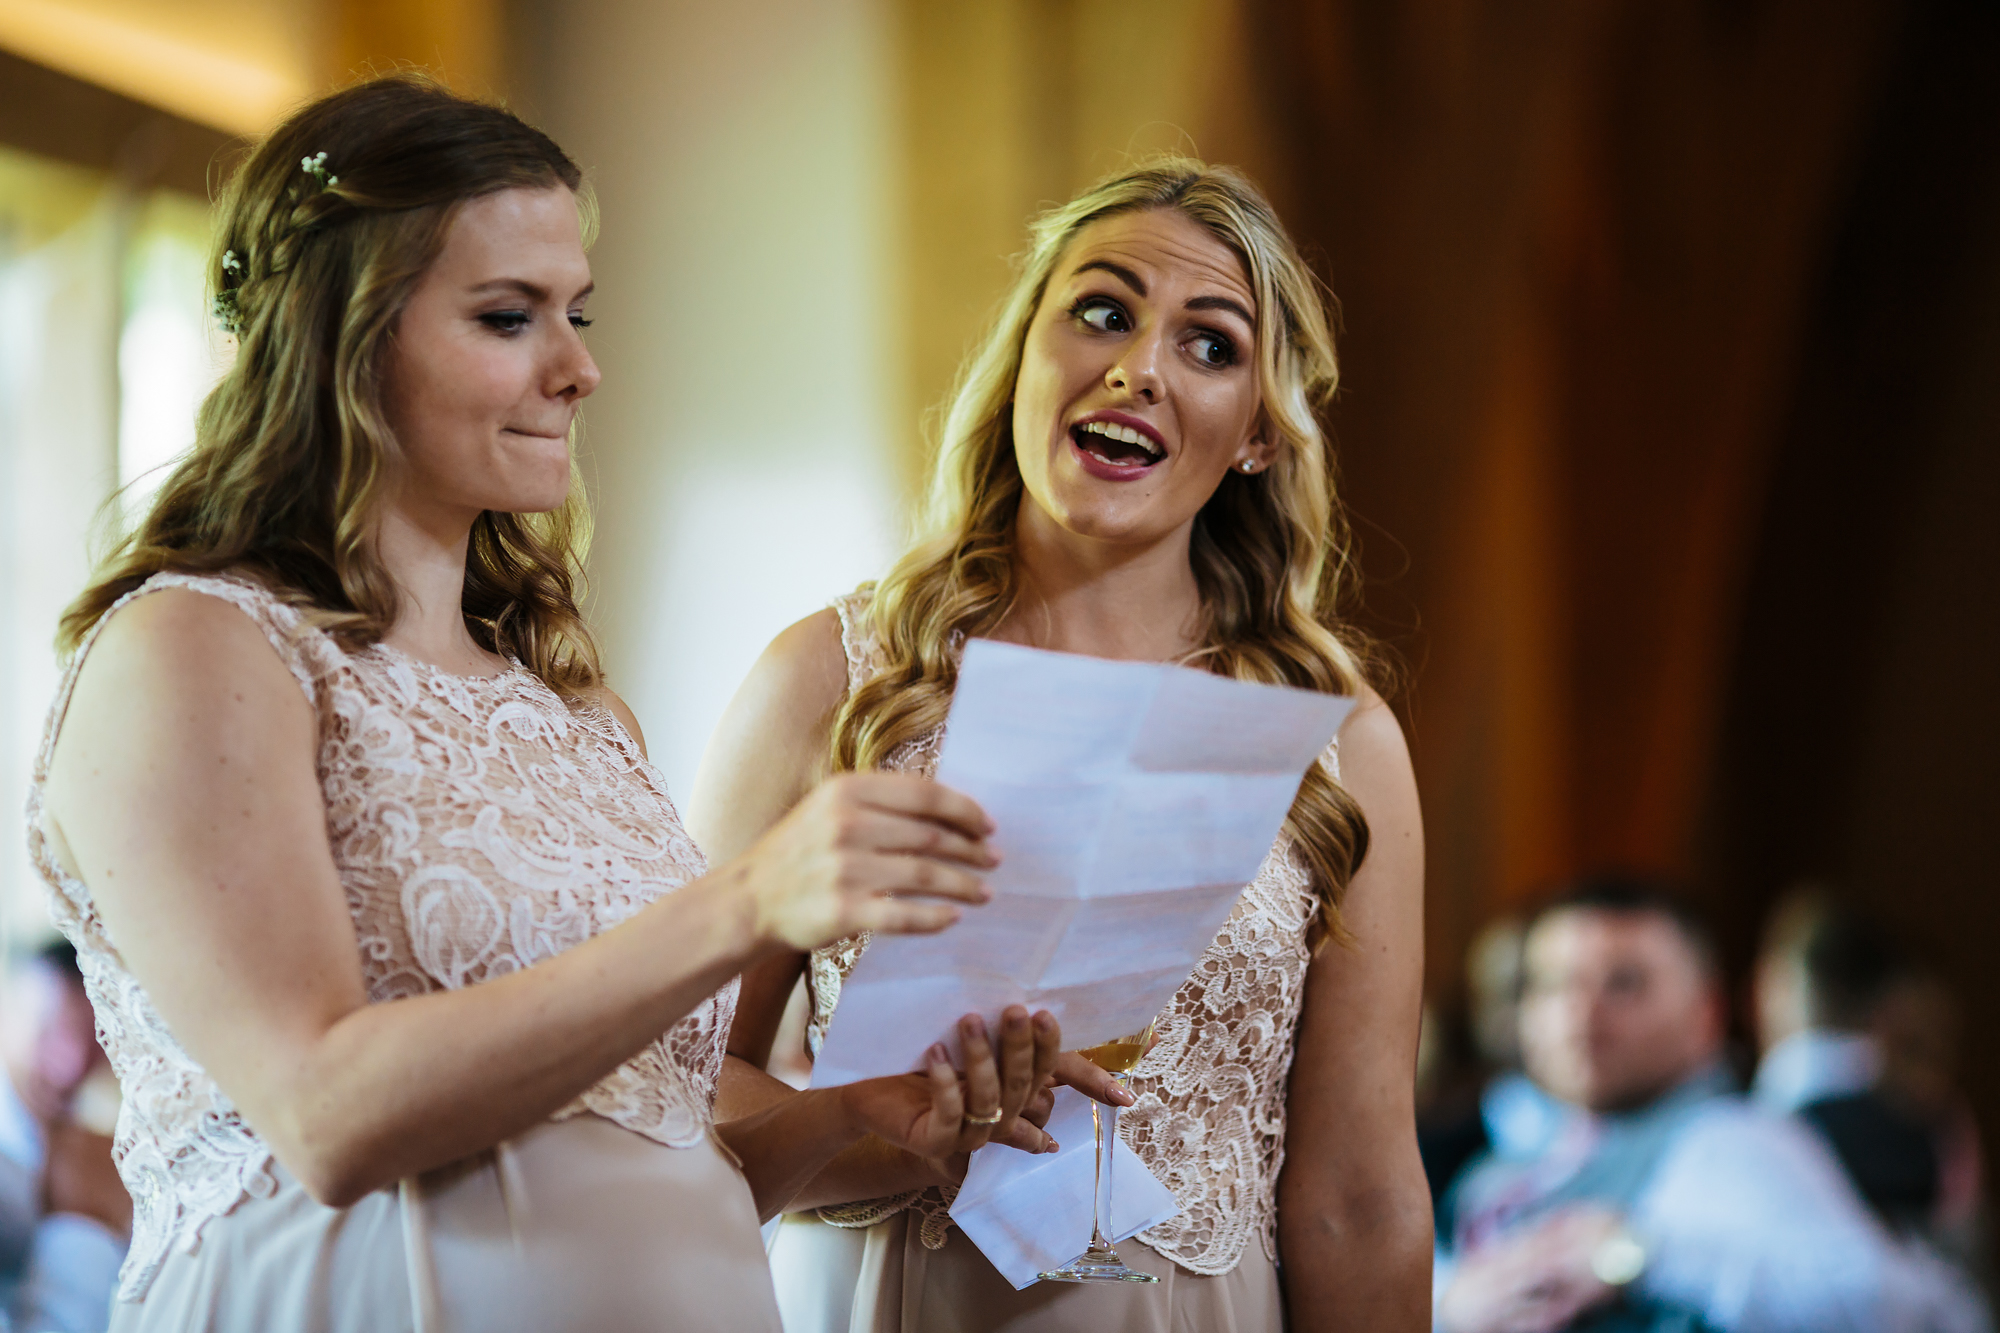 Singing bridesmaids at a wedding emotional